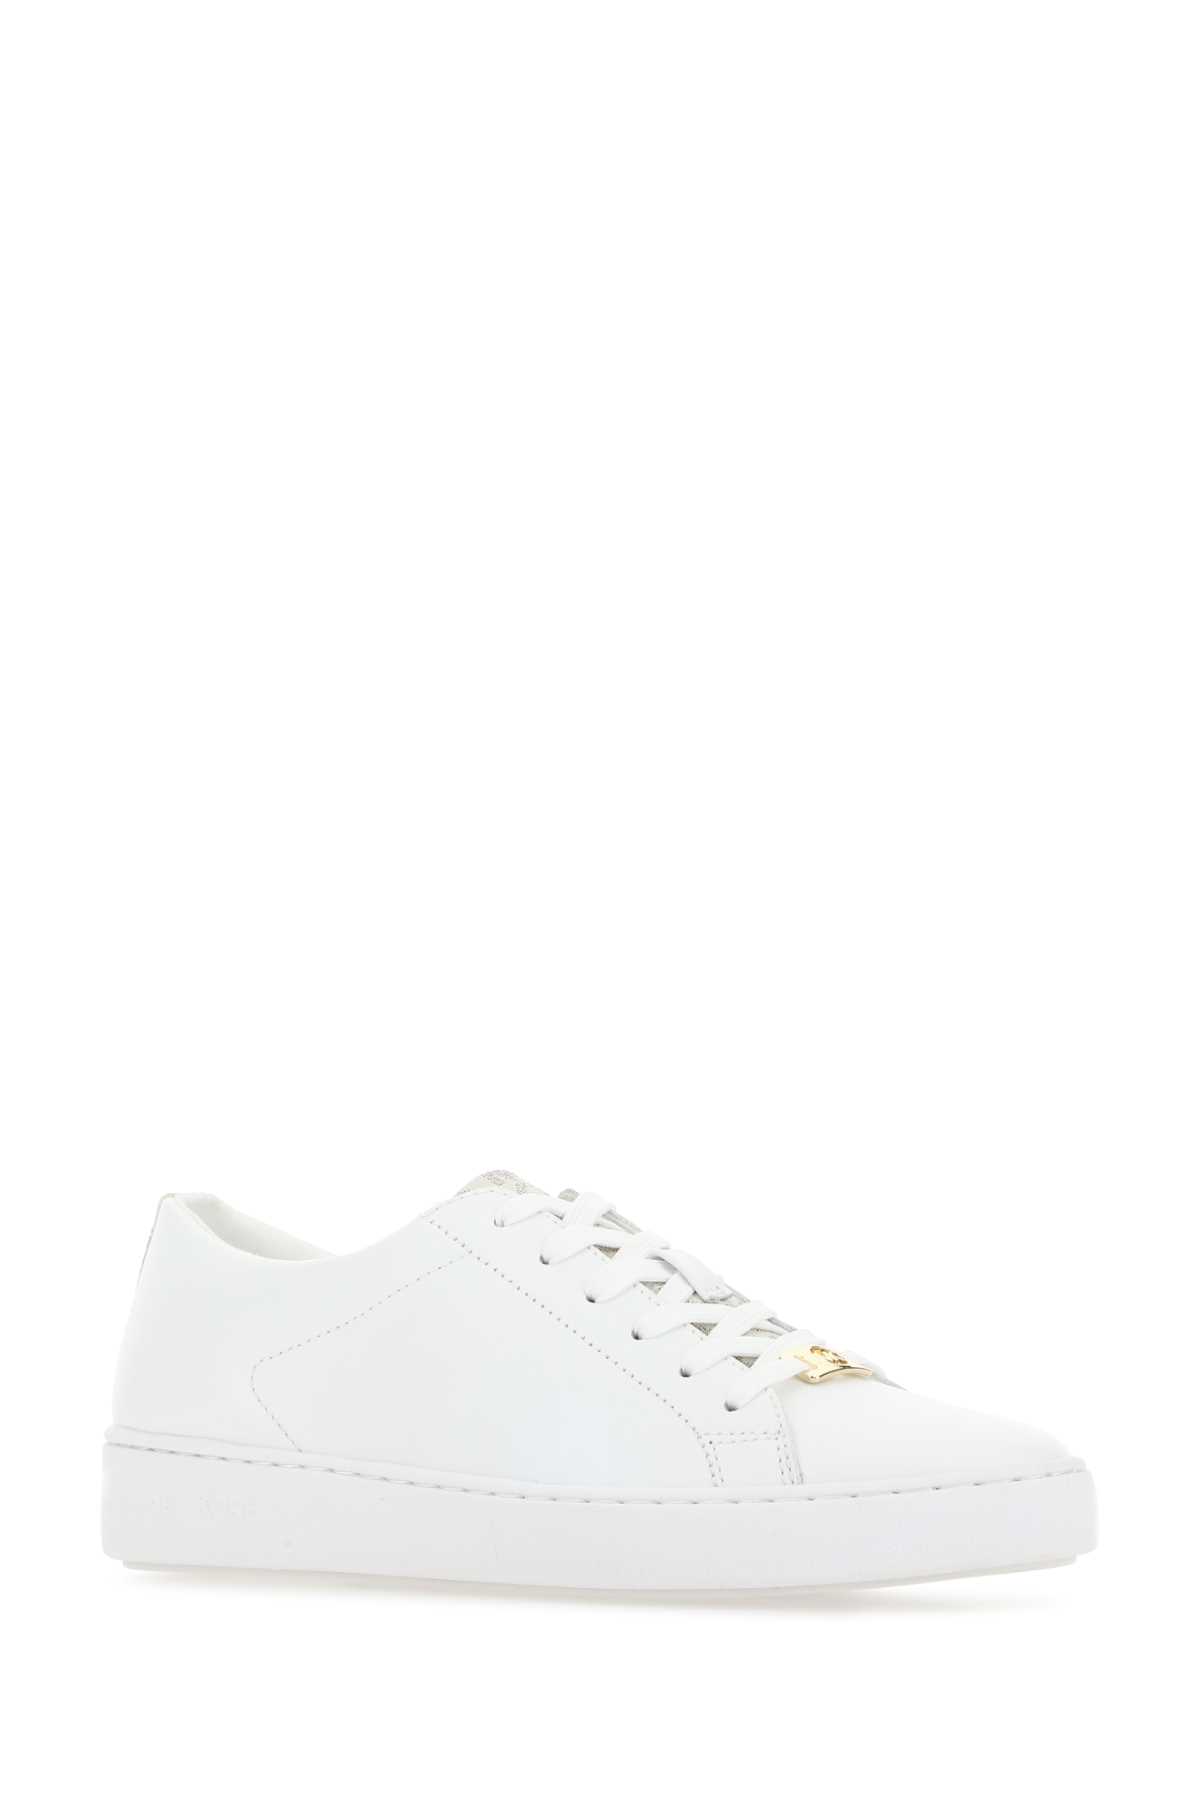 Shop Michael Kors White Leather Keaton Sneakers In Vanilla